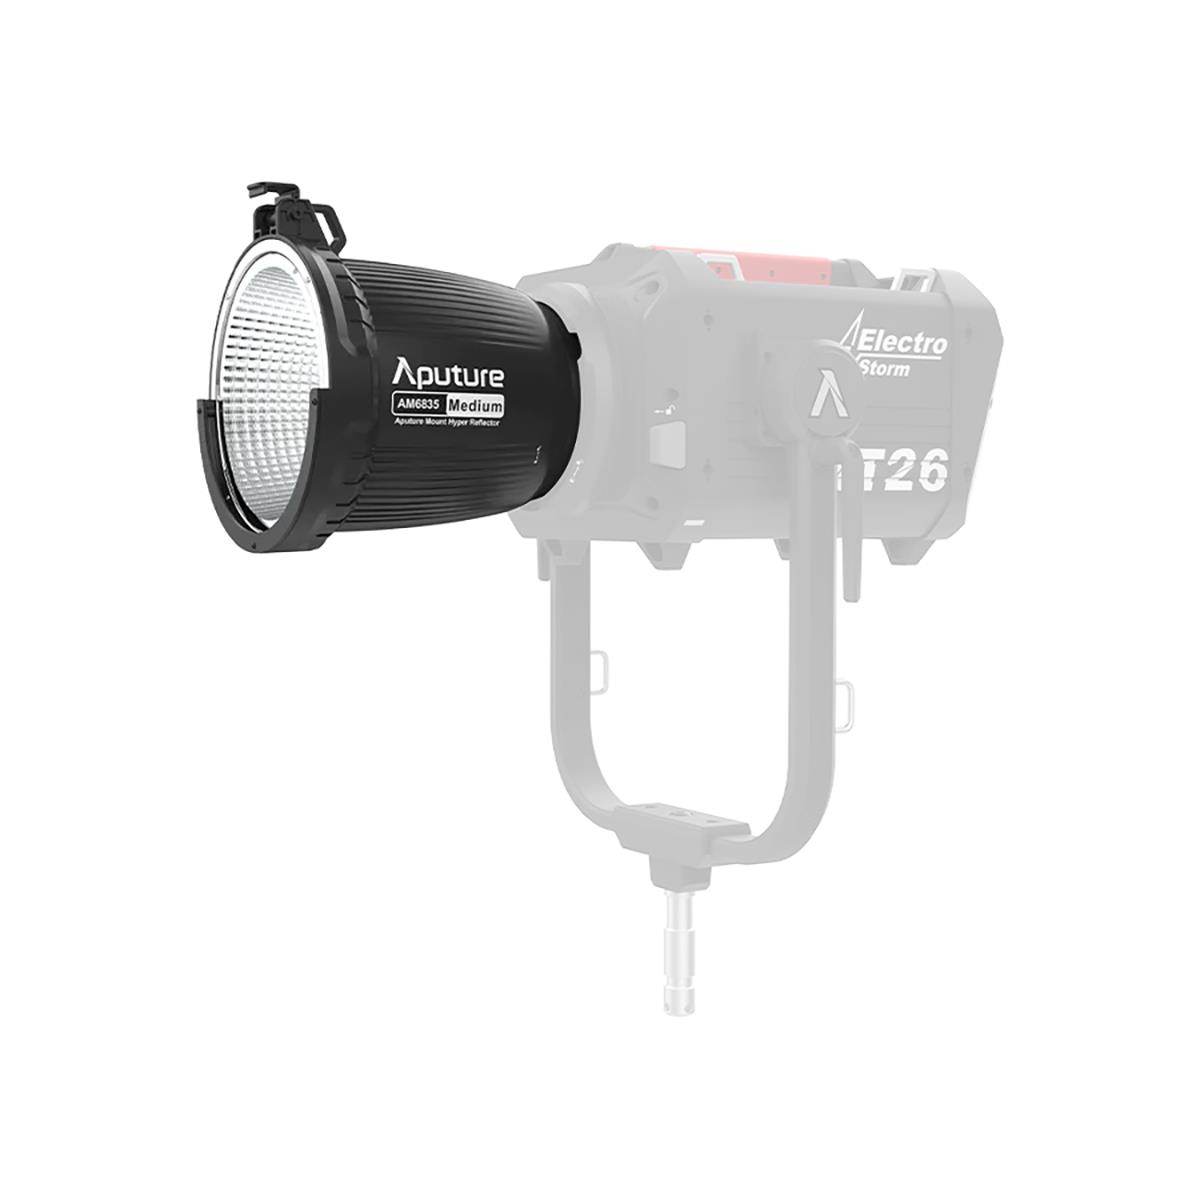 Image of Aputure AM6835 Medium Angle Reflector for Electro Storm CS15/XT26 LED Light